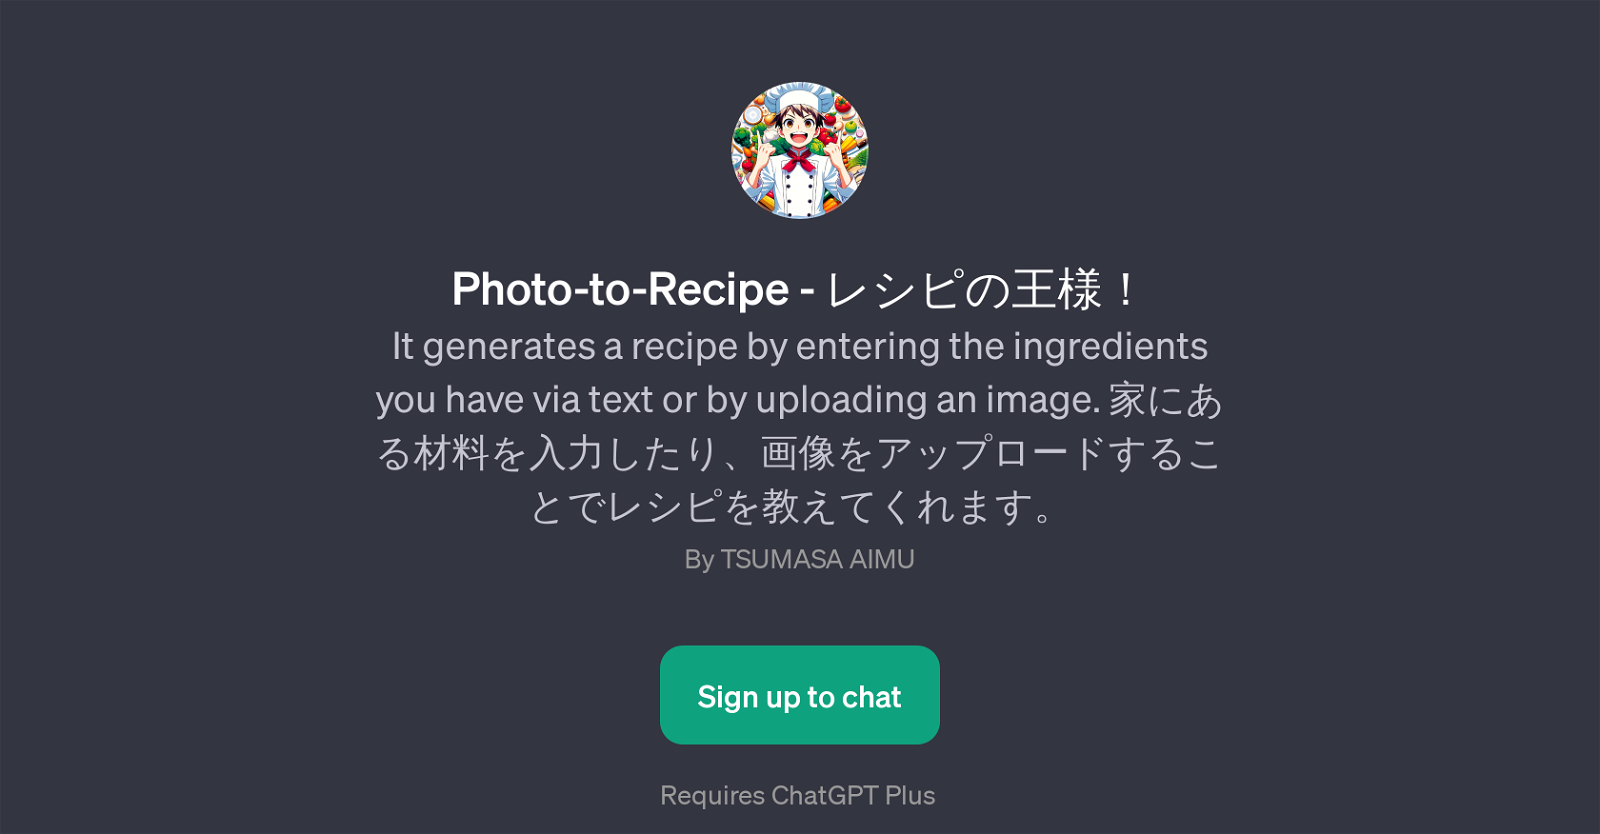 Photo-to-Recipe website